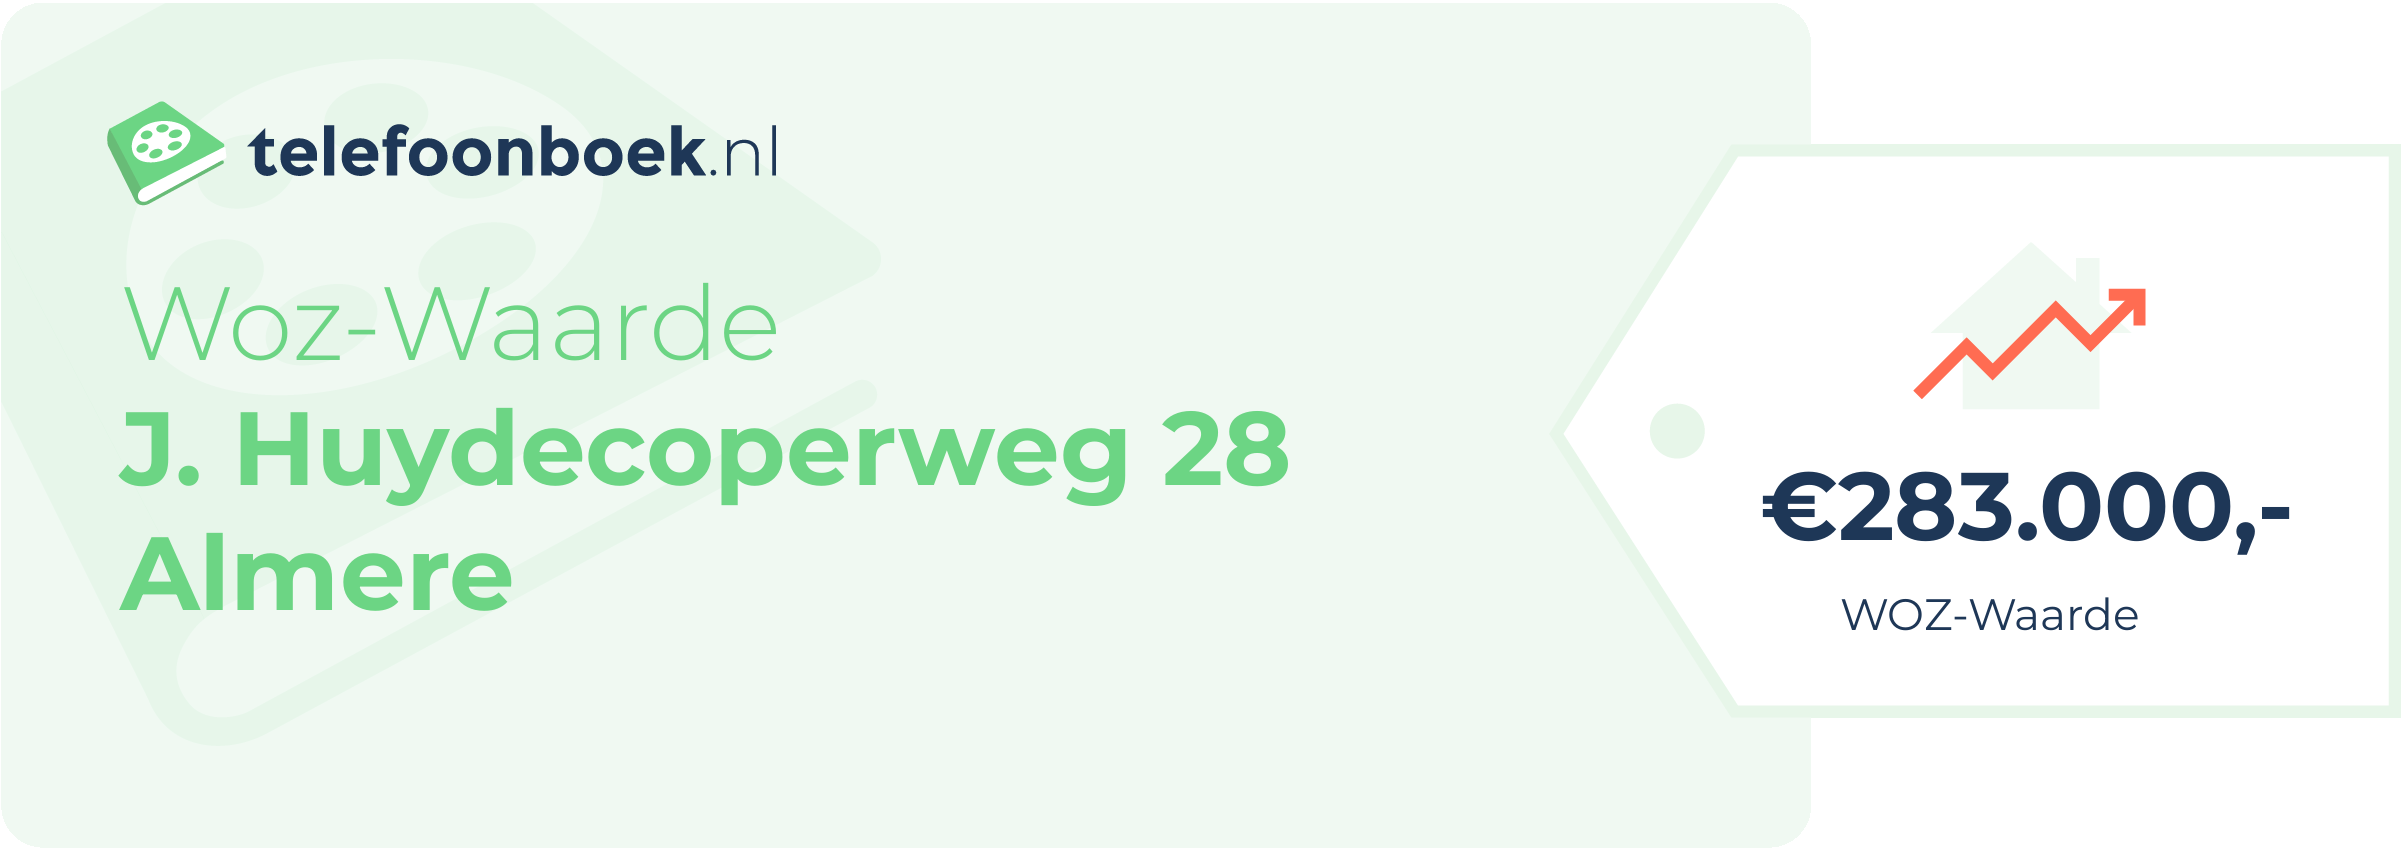 WOZ-waarde J. Huydecoperweg 28 Almere